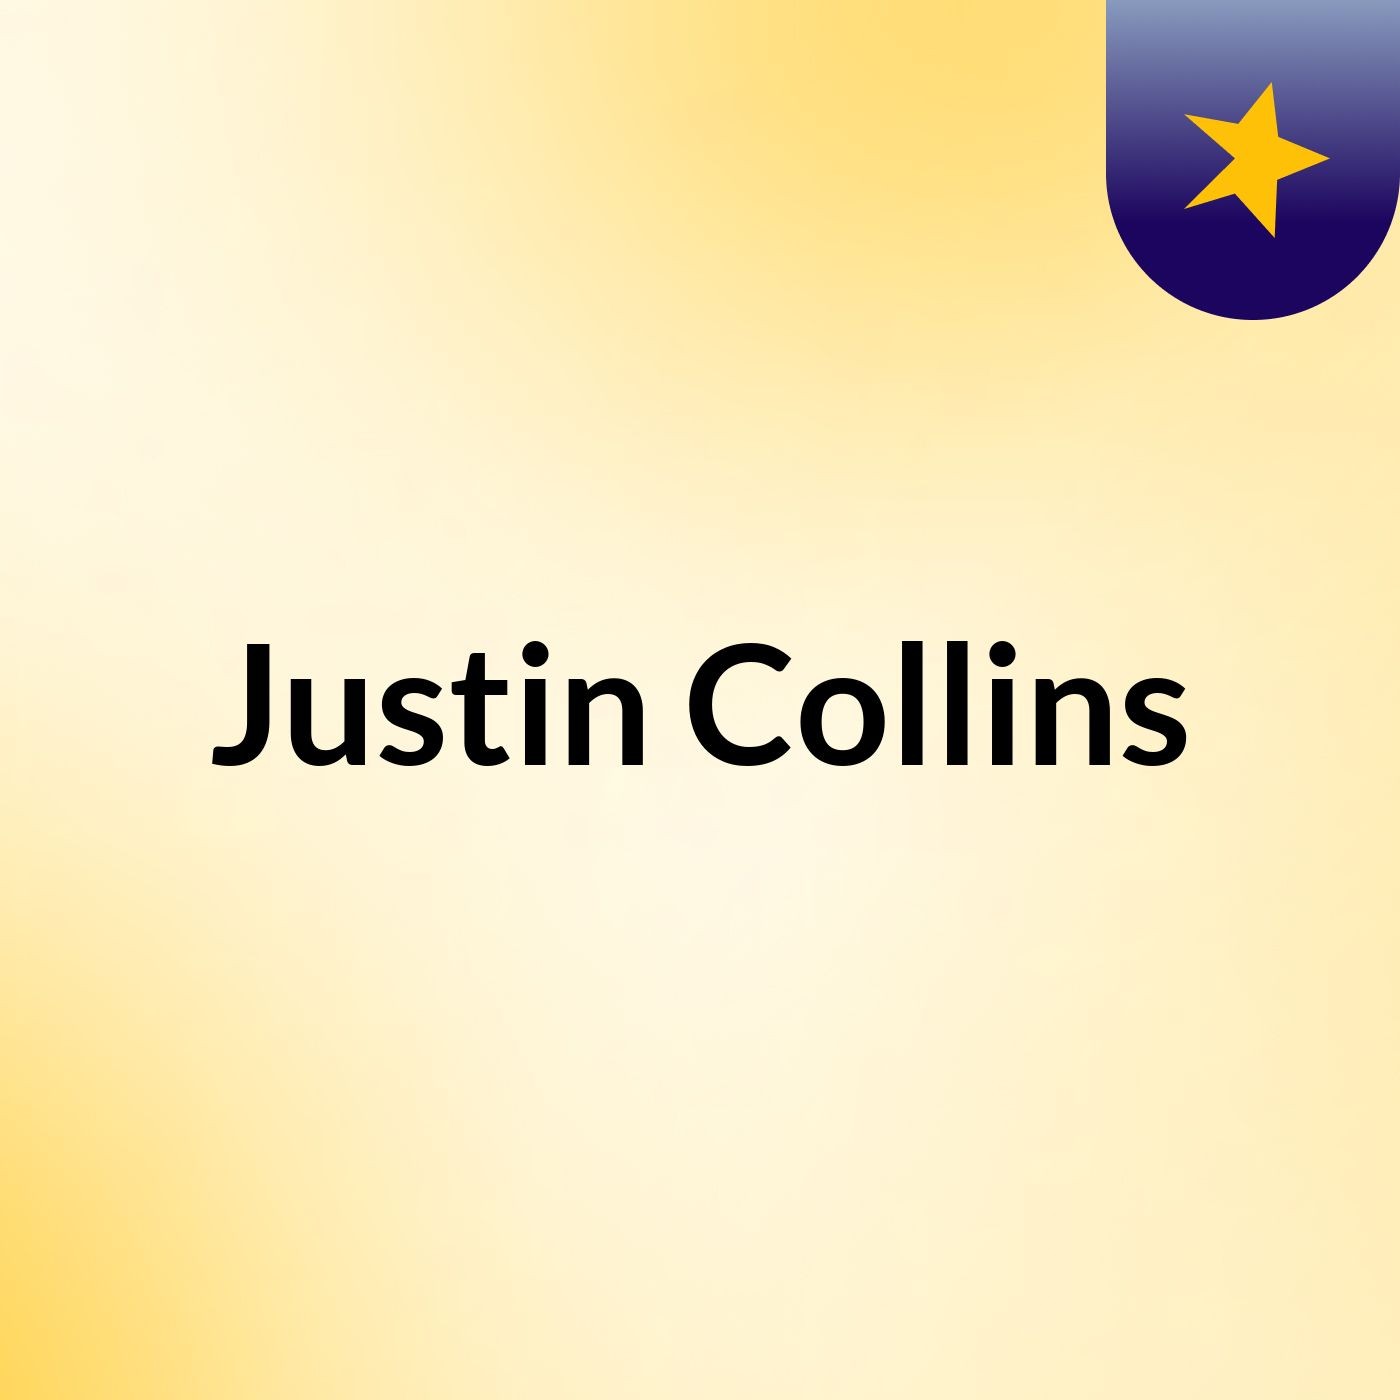 Justin Collins